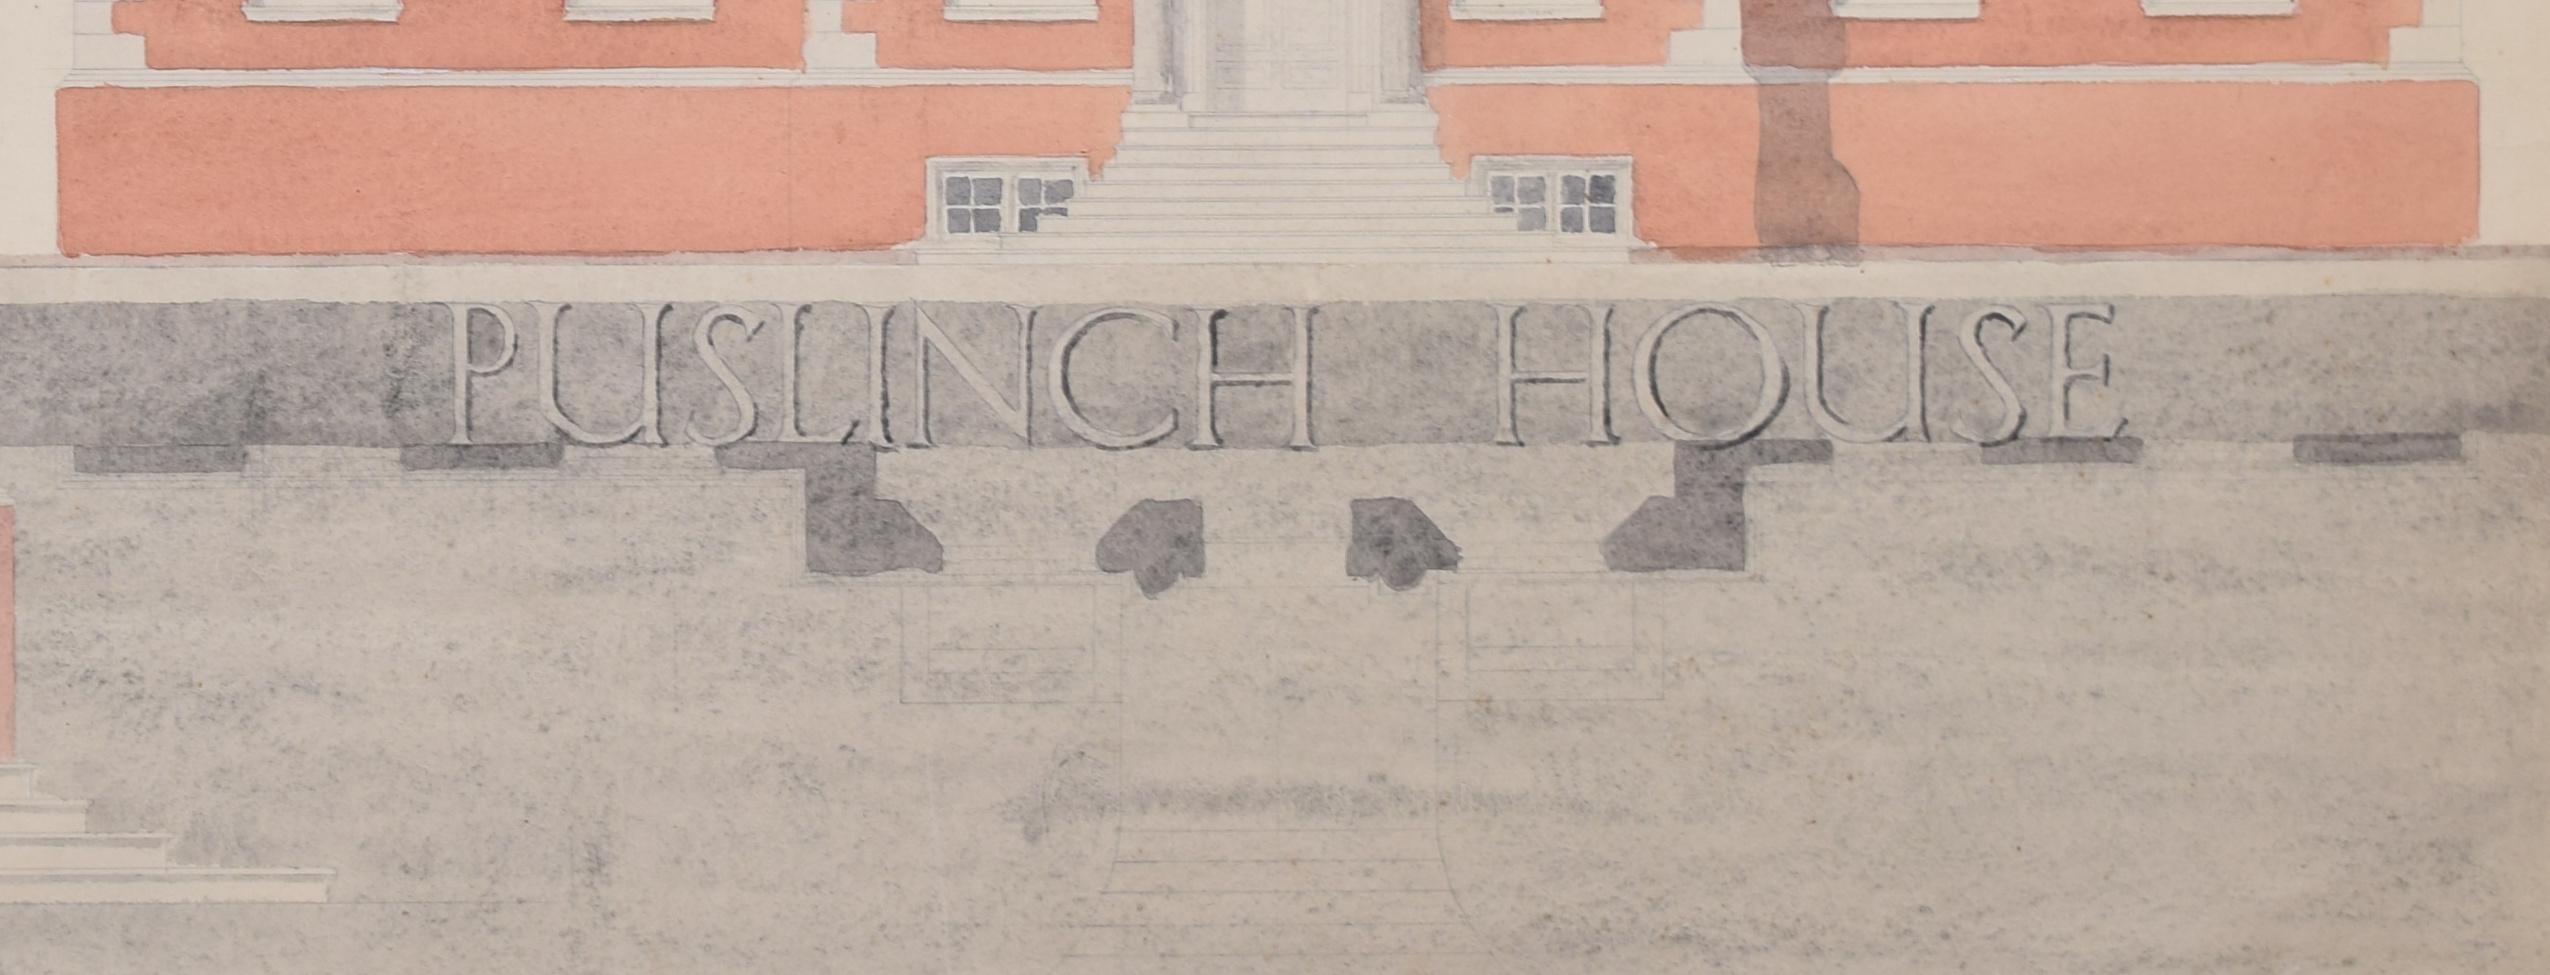 Puslinch House, Devon architectural watercolour by S Clapham c. 1950 For Sale 3